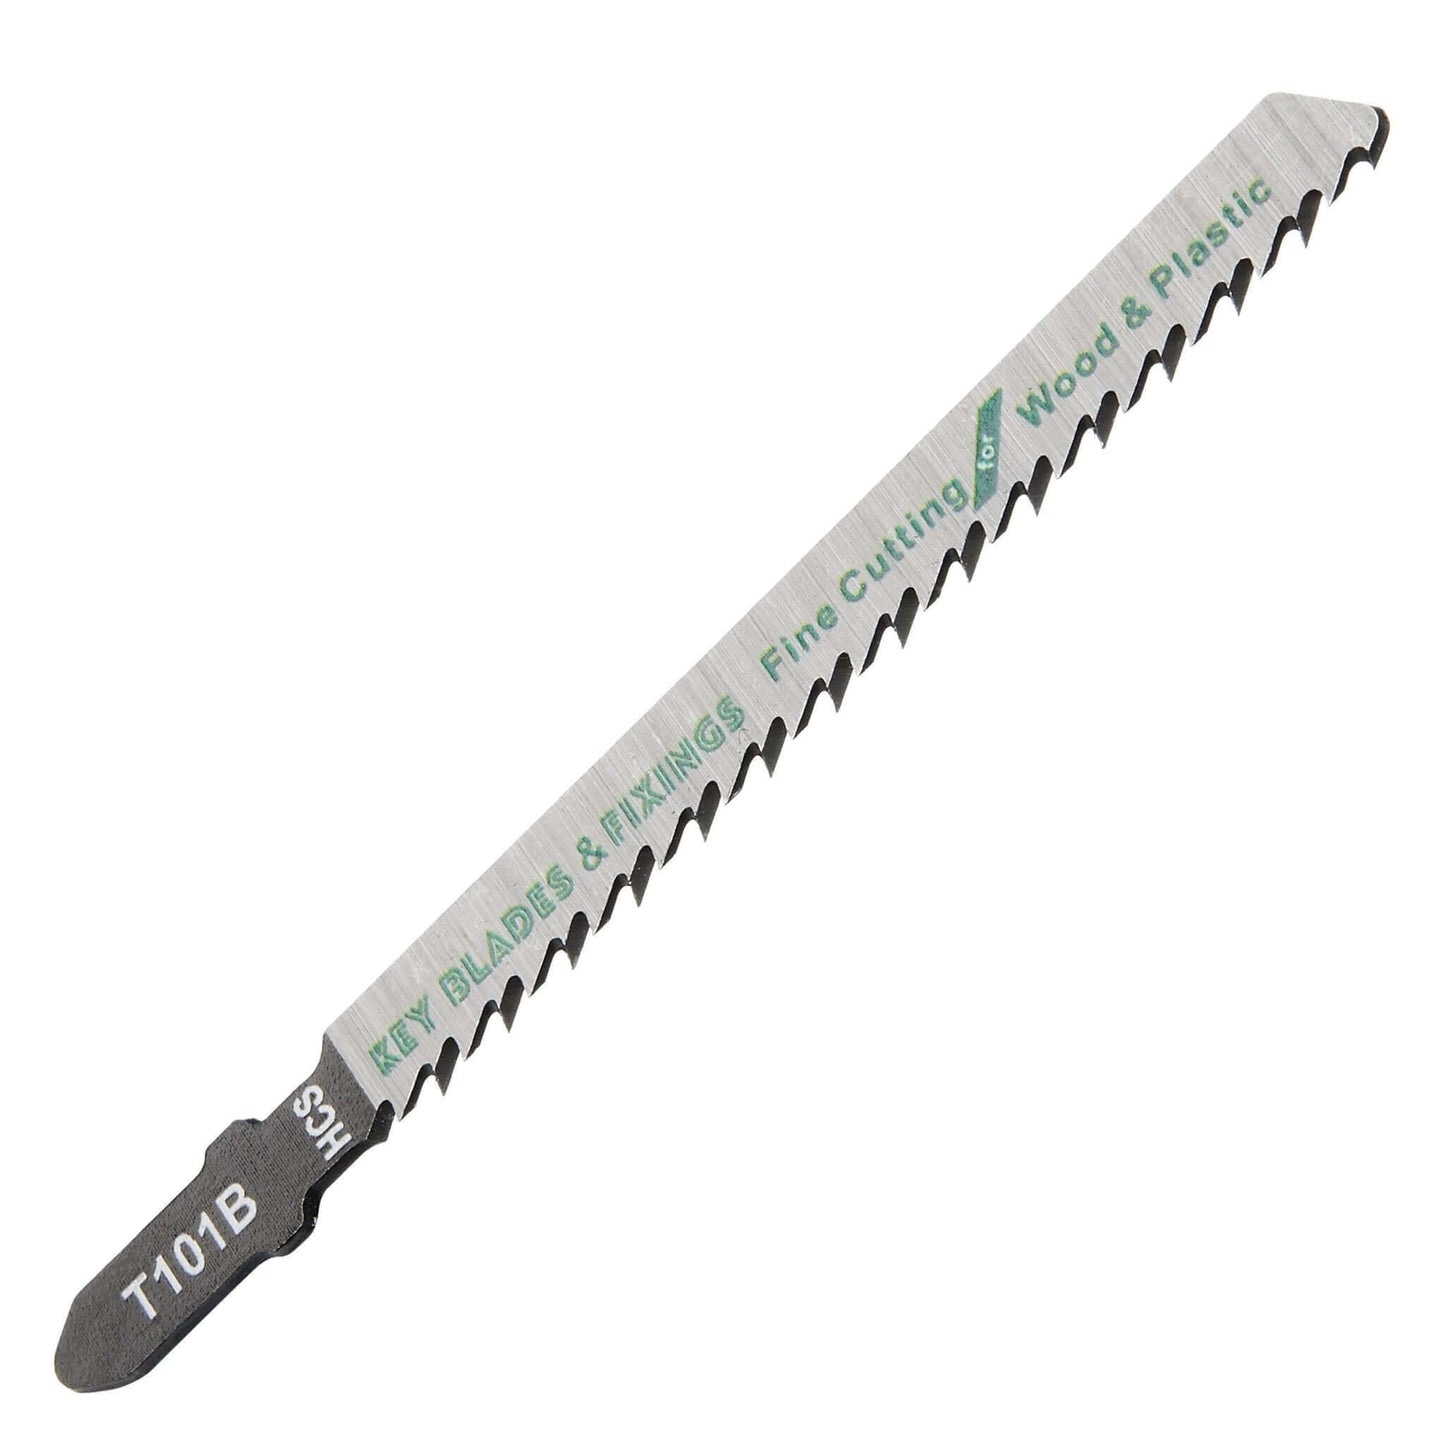 Key Blades T101B Jigsaw Blades 5 Pack - 1111 -  Shop Key Blades & Fixings | Workwear, Power tools & hand tools online - Key Blades & Fixings Ltd